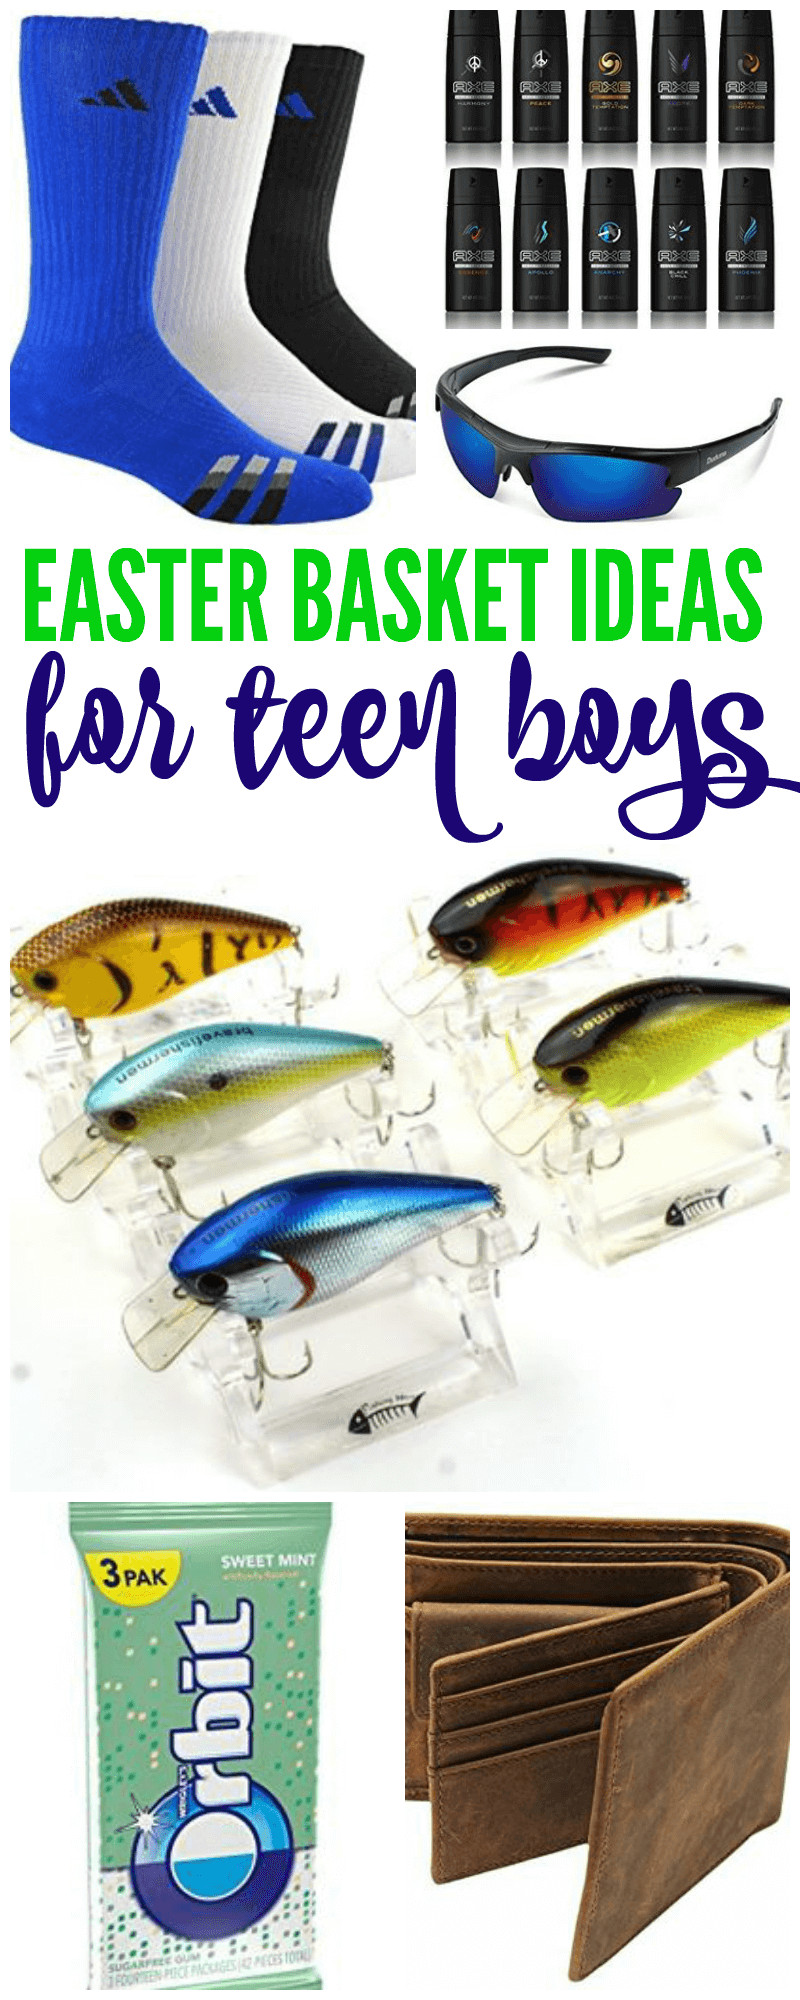 Easter Gift Ideas For Teen Boys
 Easter Basket Ideas for Teen Boys